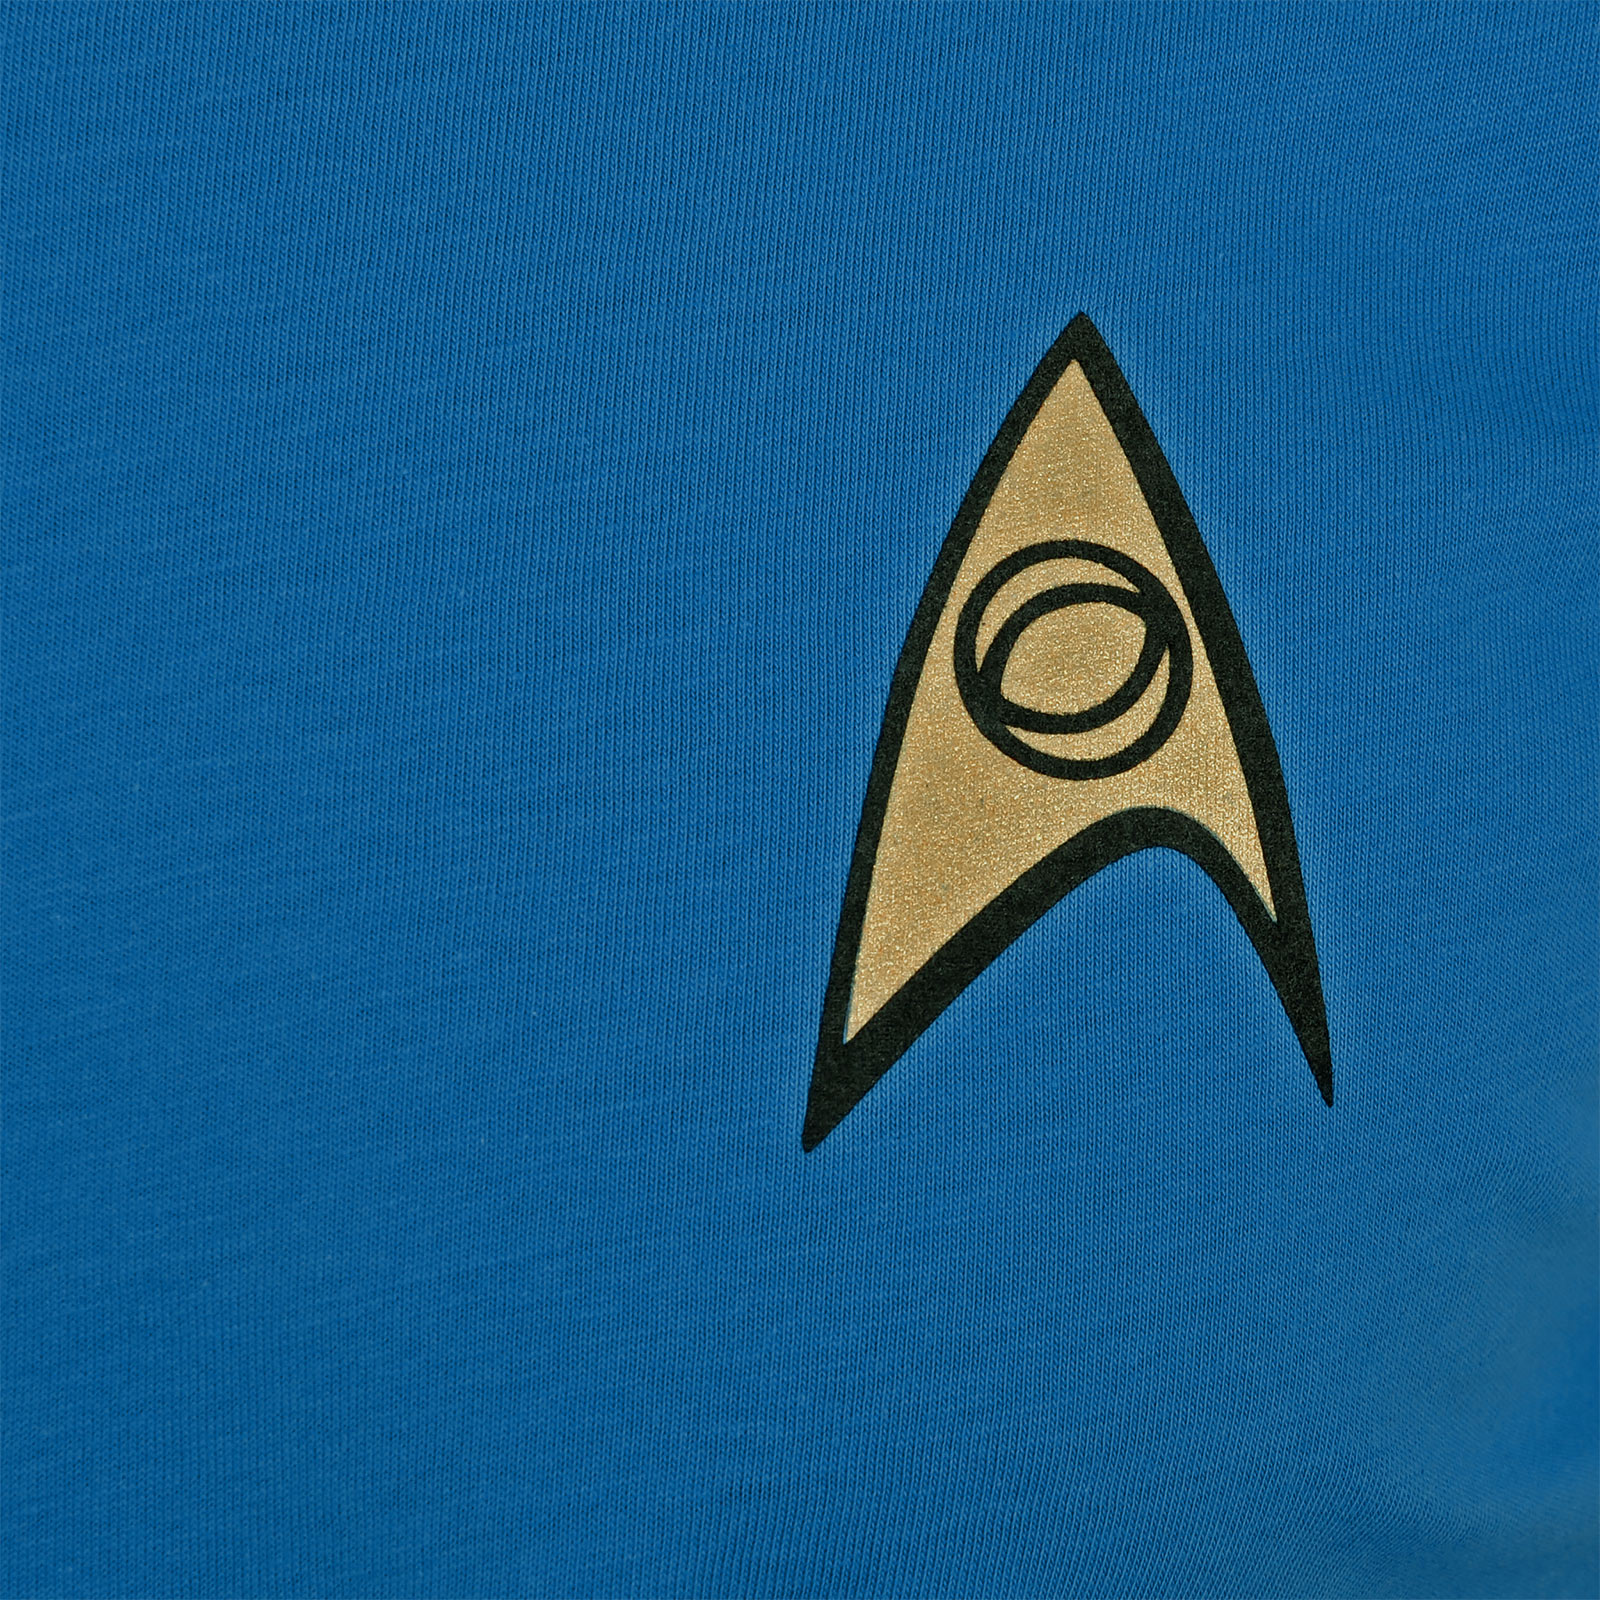 Star Trek - Mister Spock Uniform T-Shirt blauw